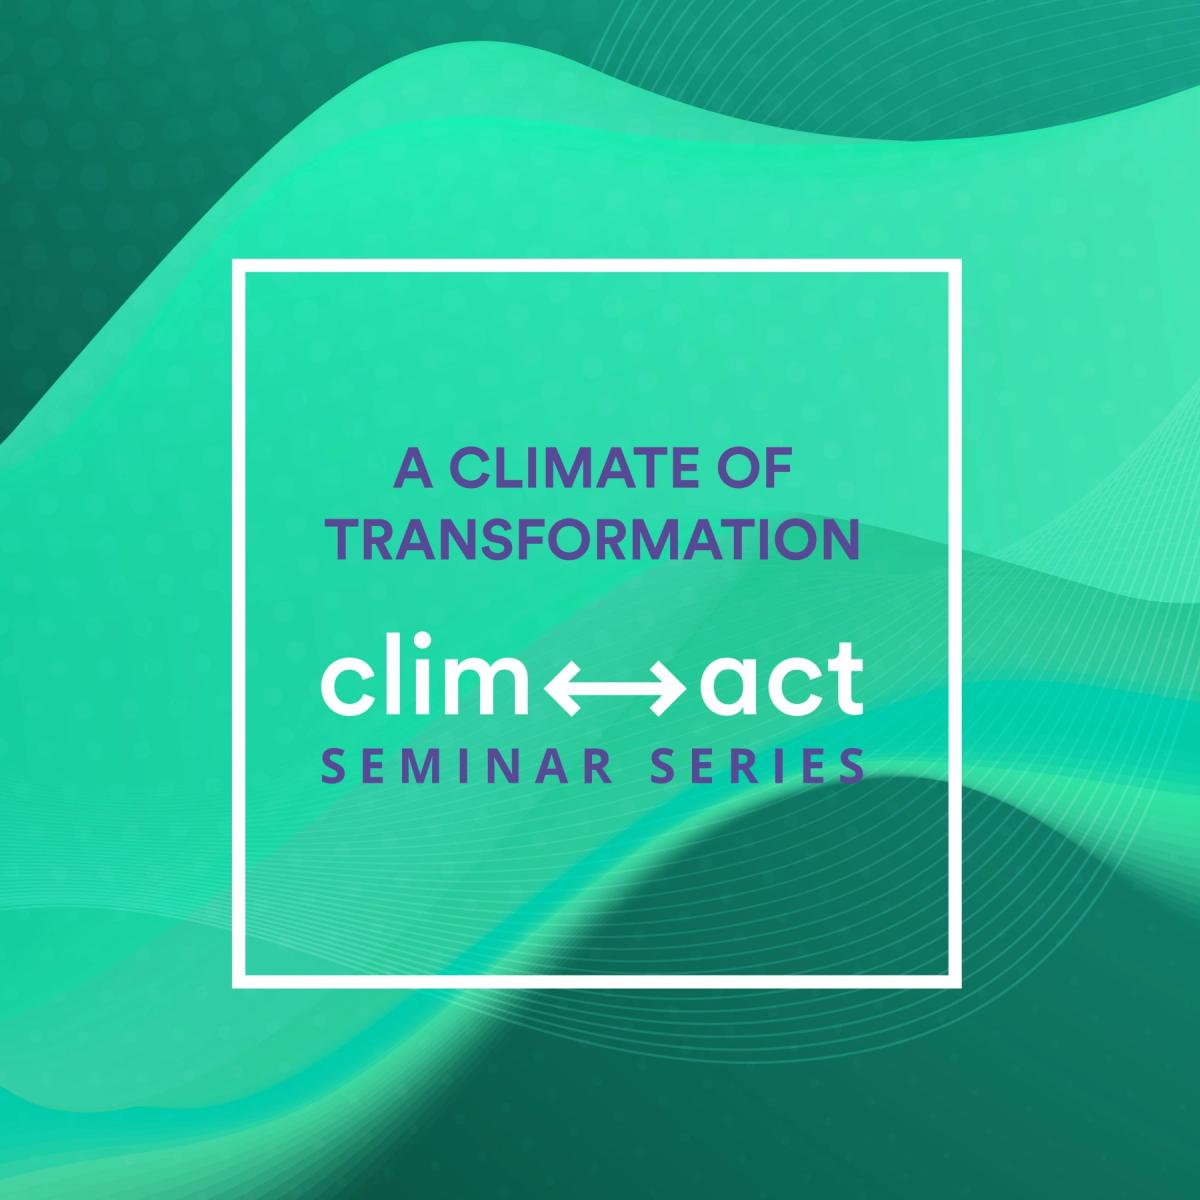 CLIMACT presents its third season of seminars “A Climate of Transformation”